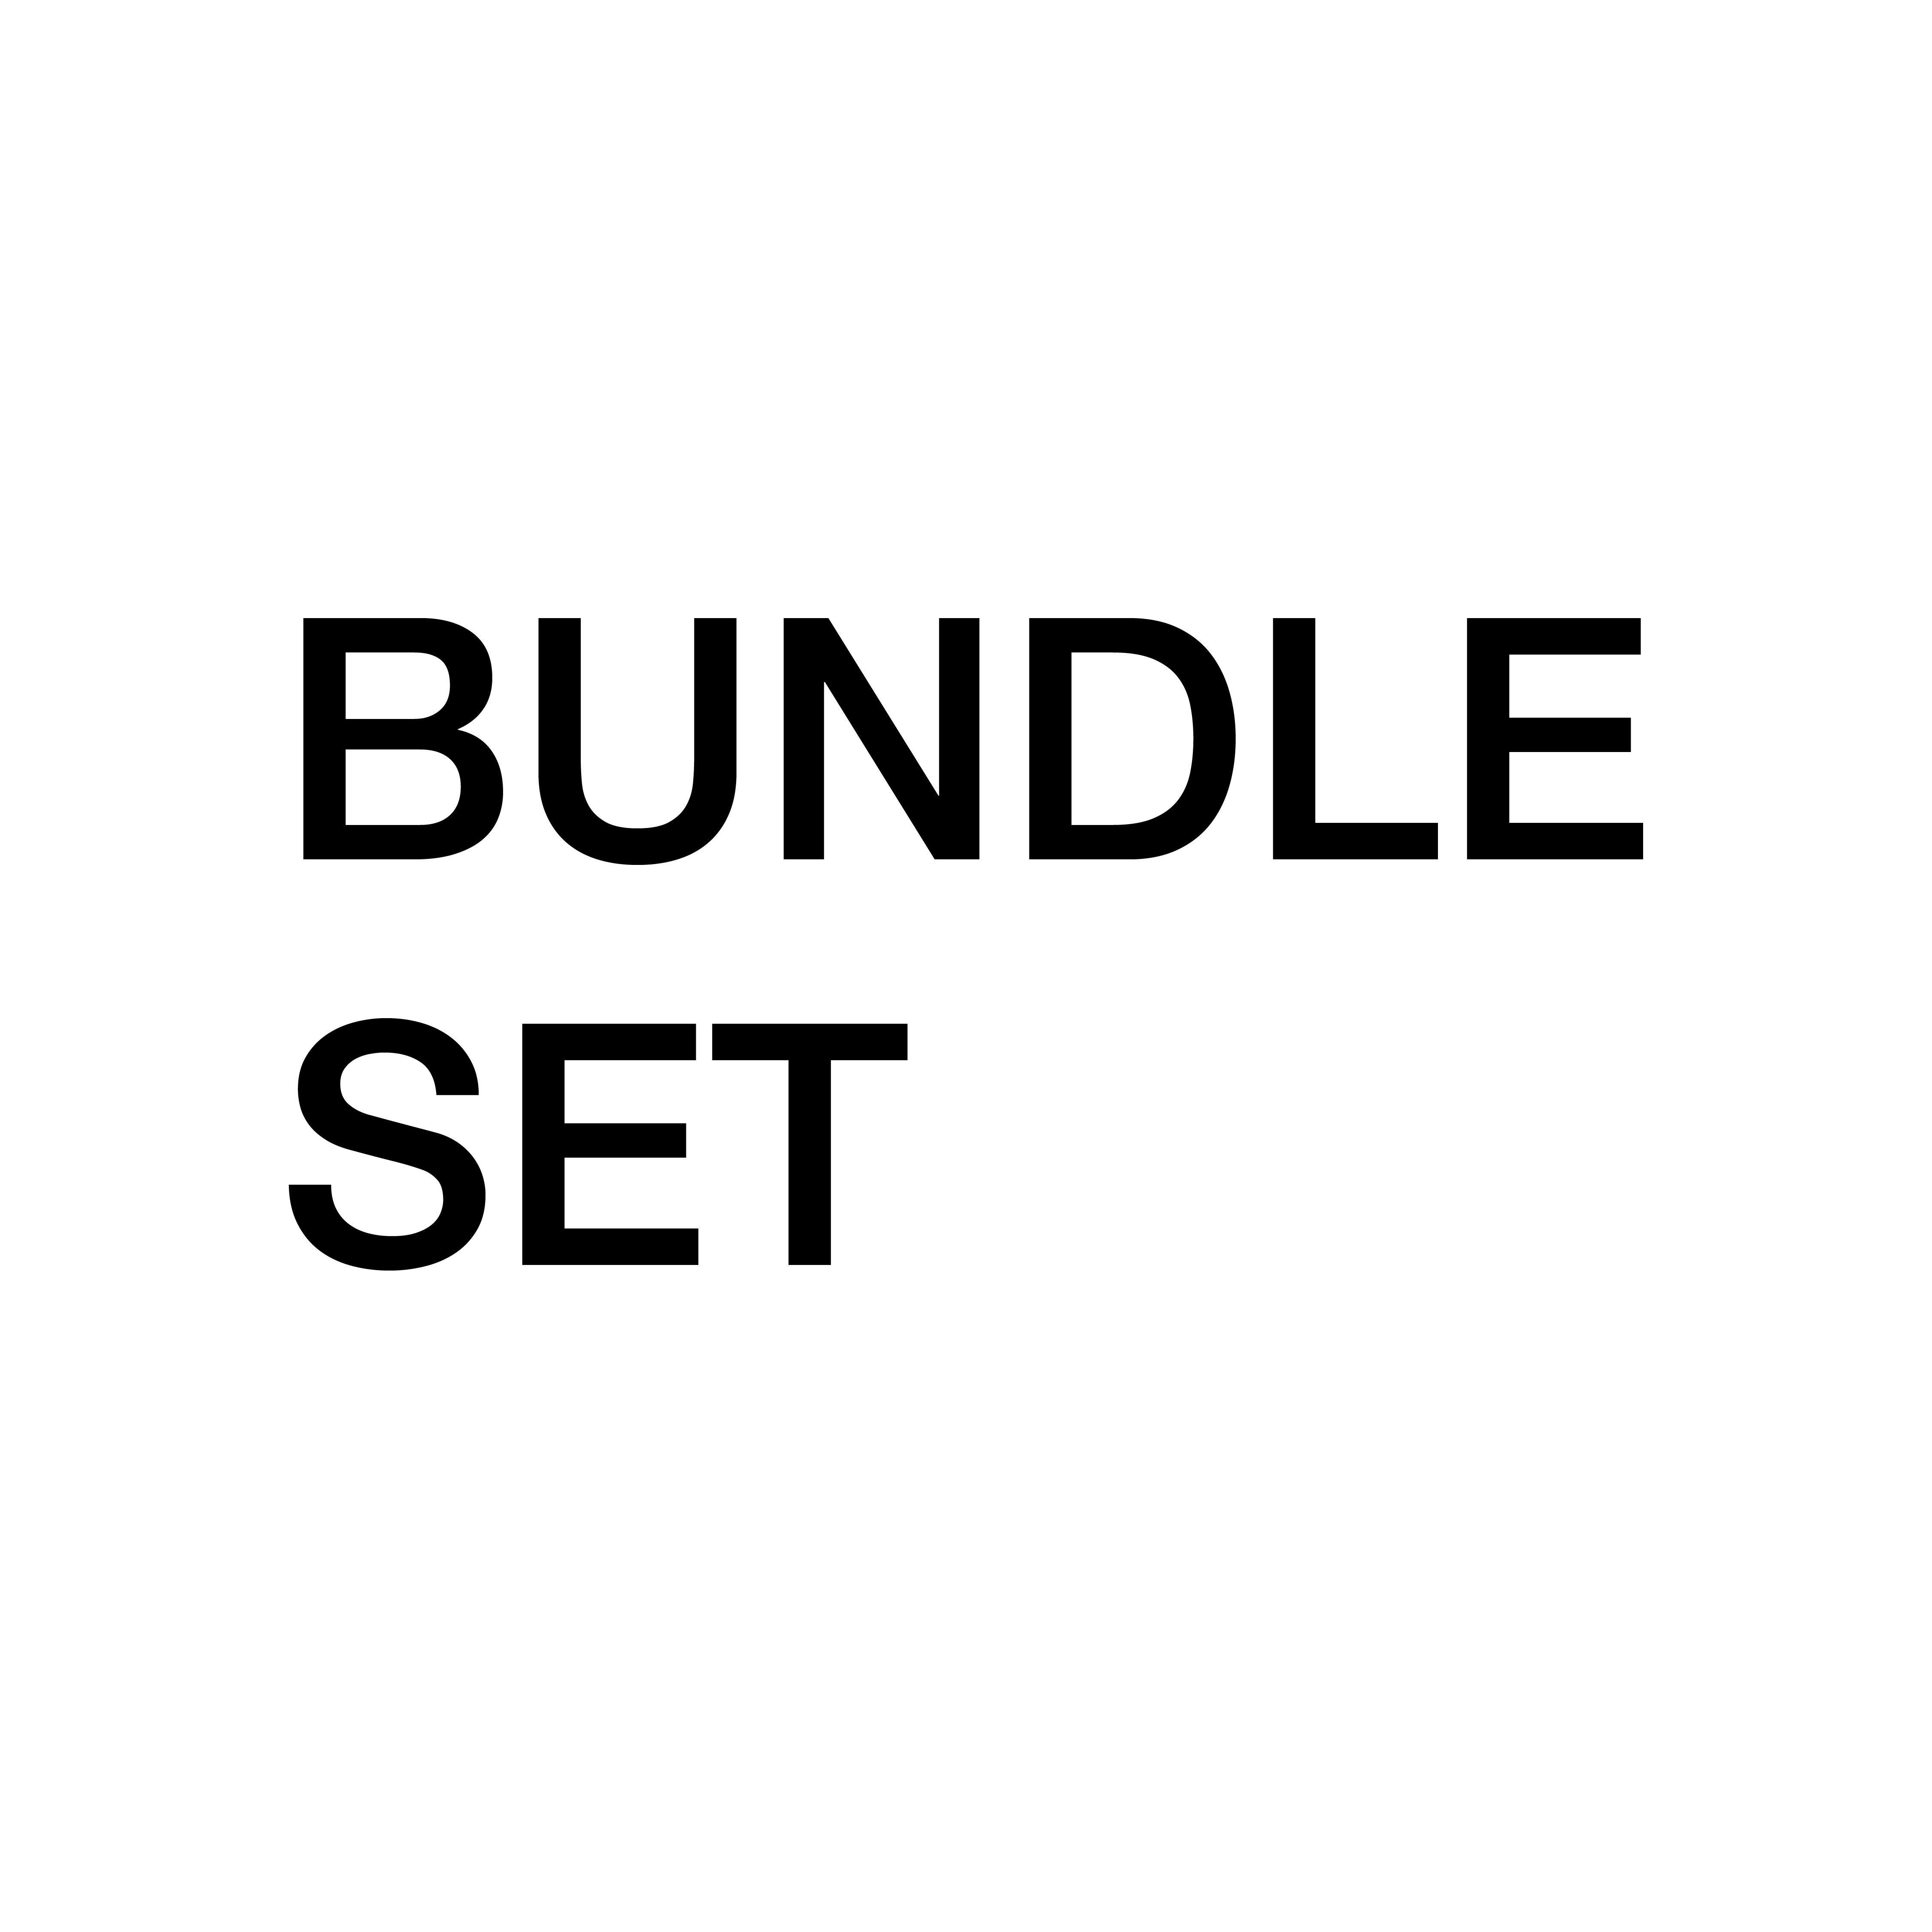 BUNDLE set